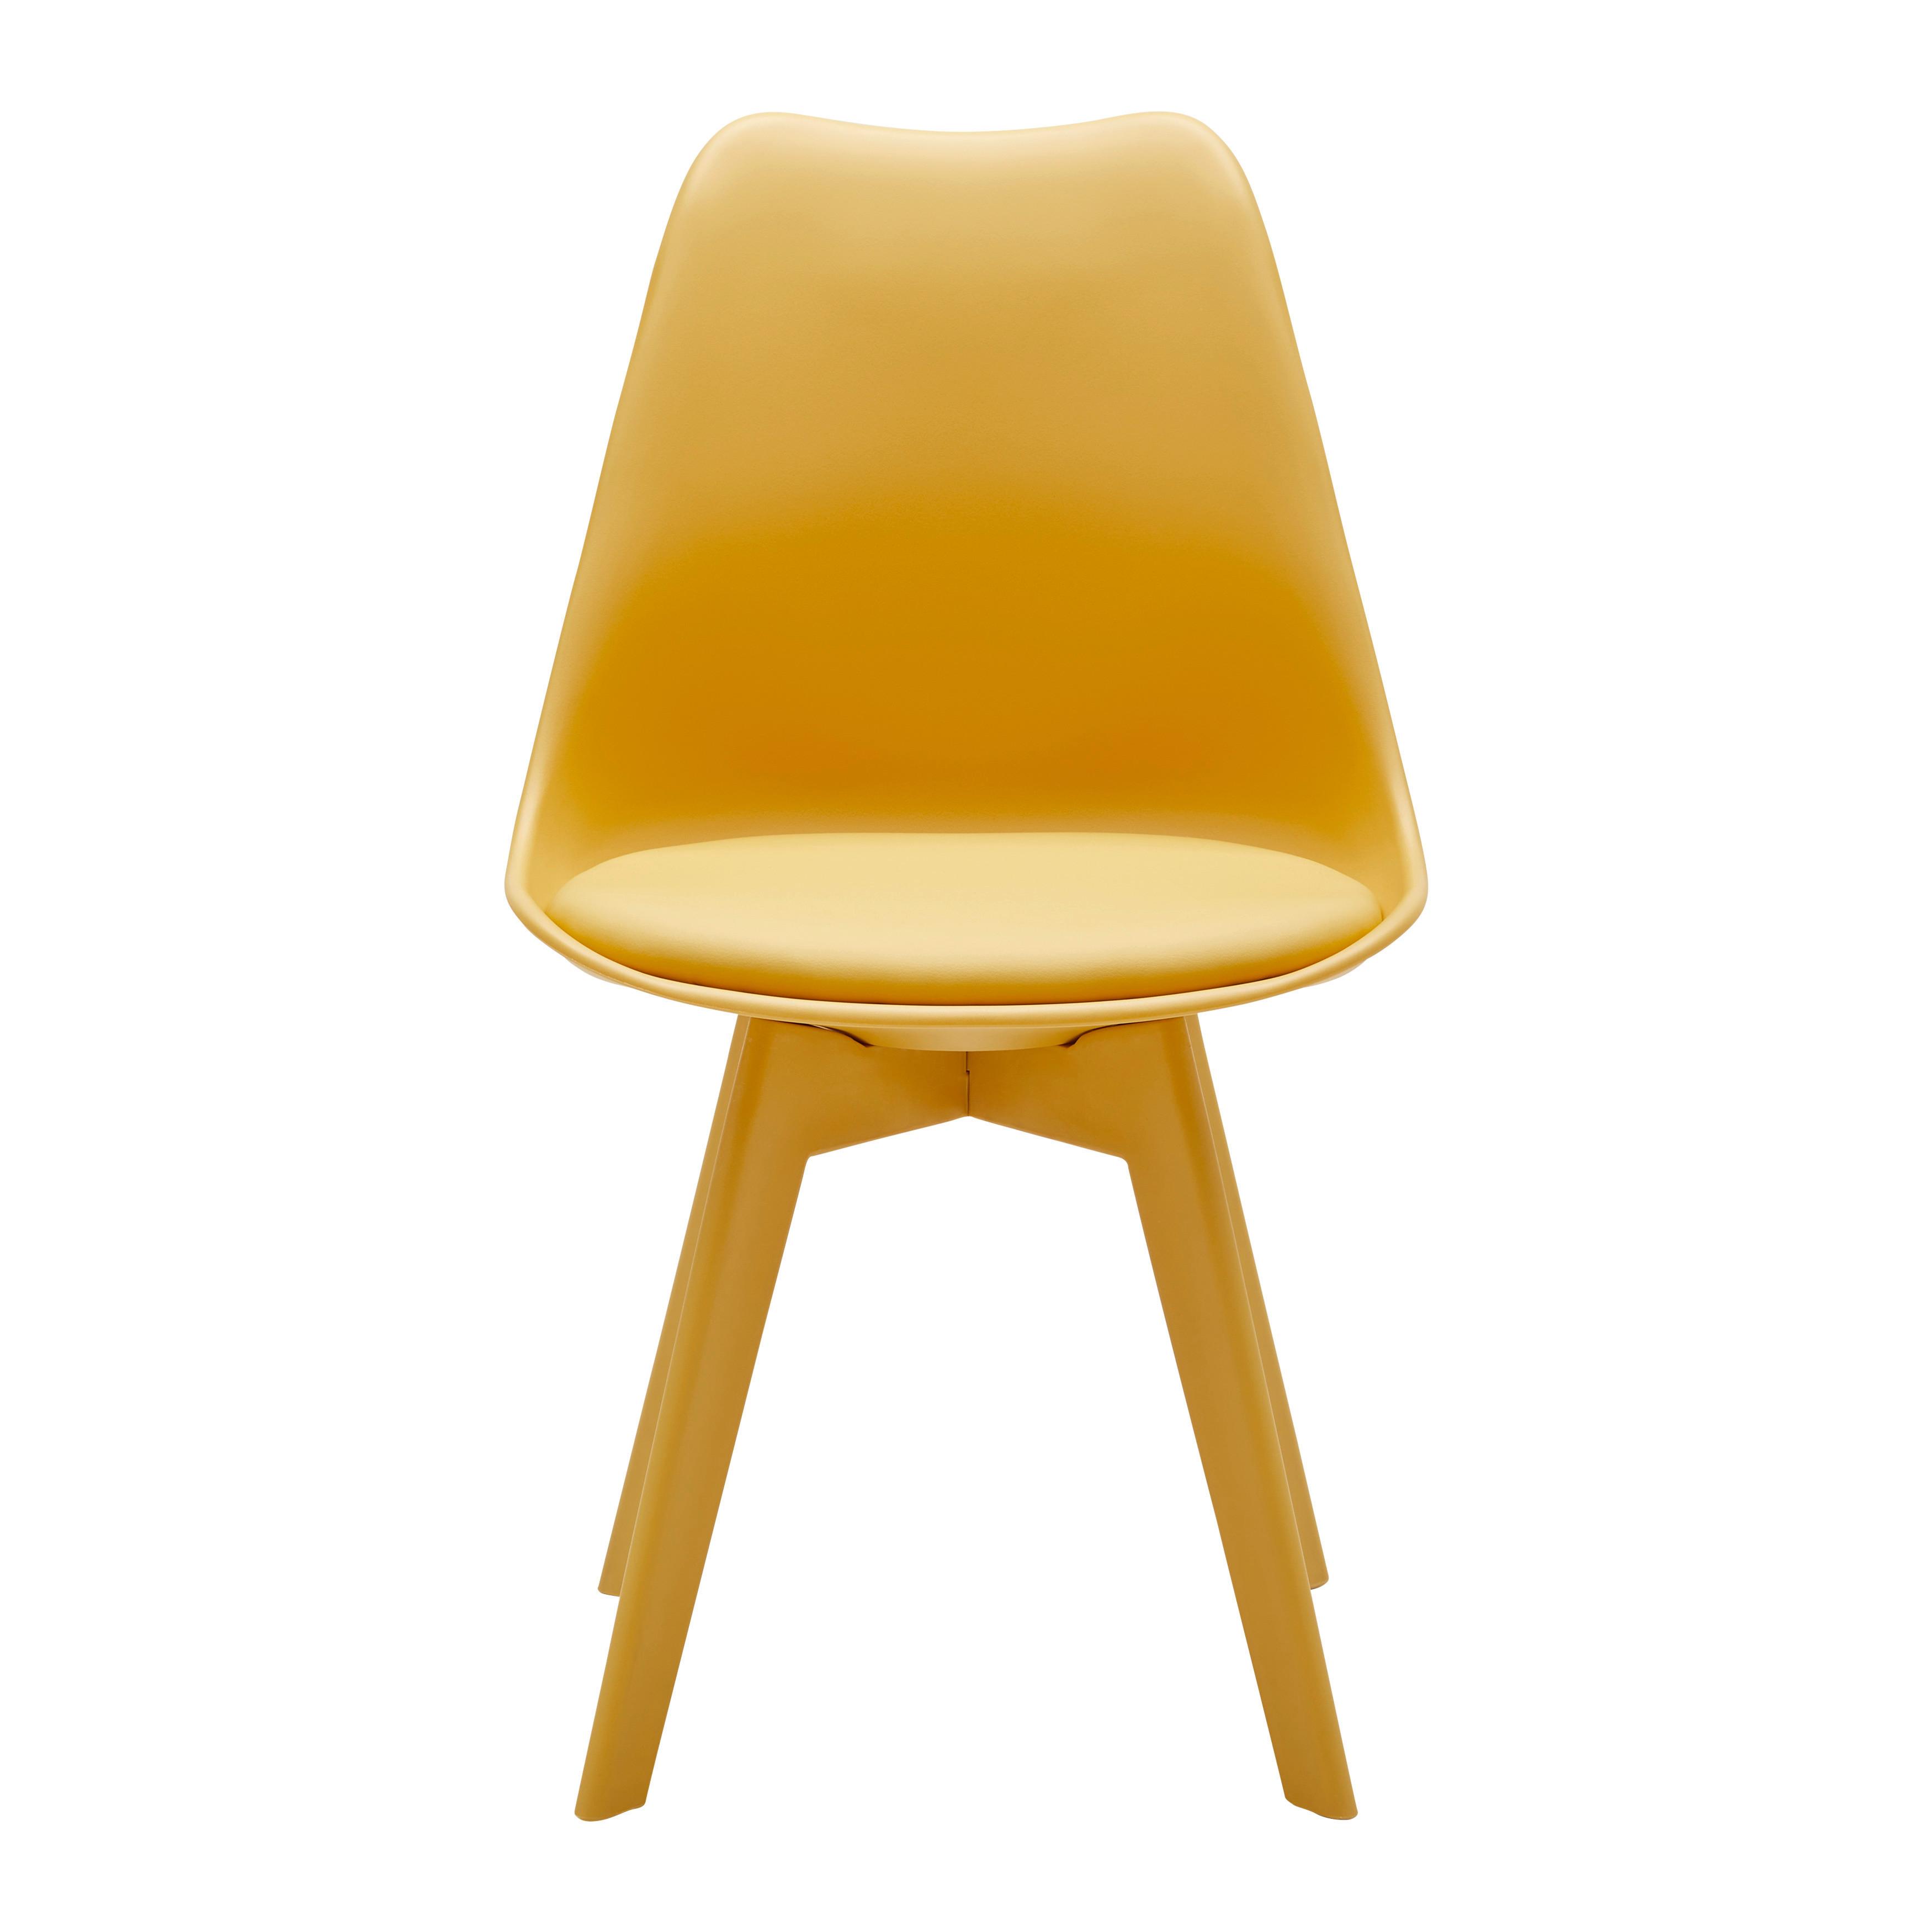 Stuhl "Mia", Lederlook, gelb, Gepolstert - Gelb, MODERN, Kunststoff/Textil (50/84/54cm) - Bessagi Home